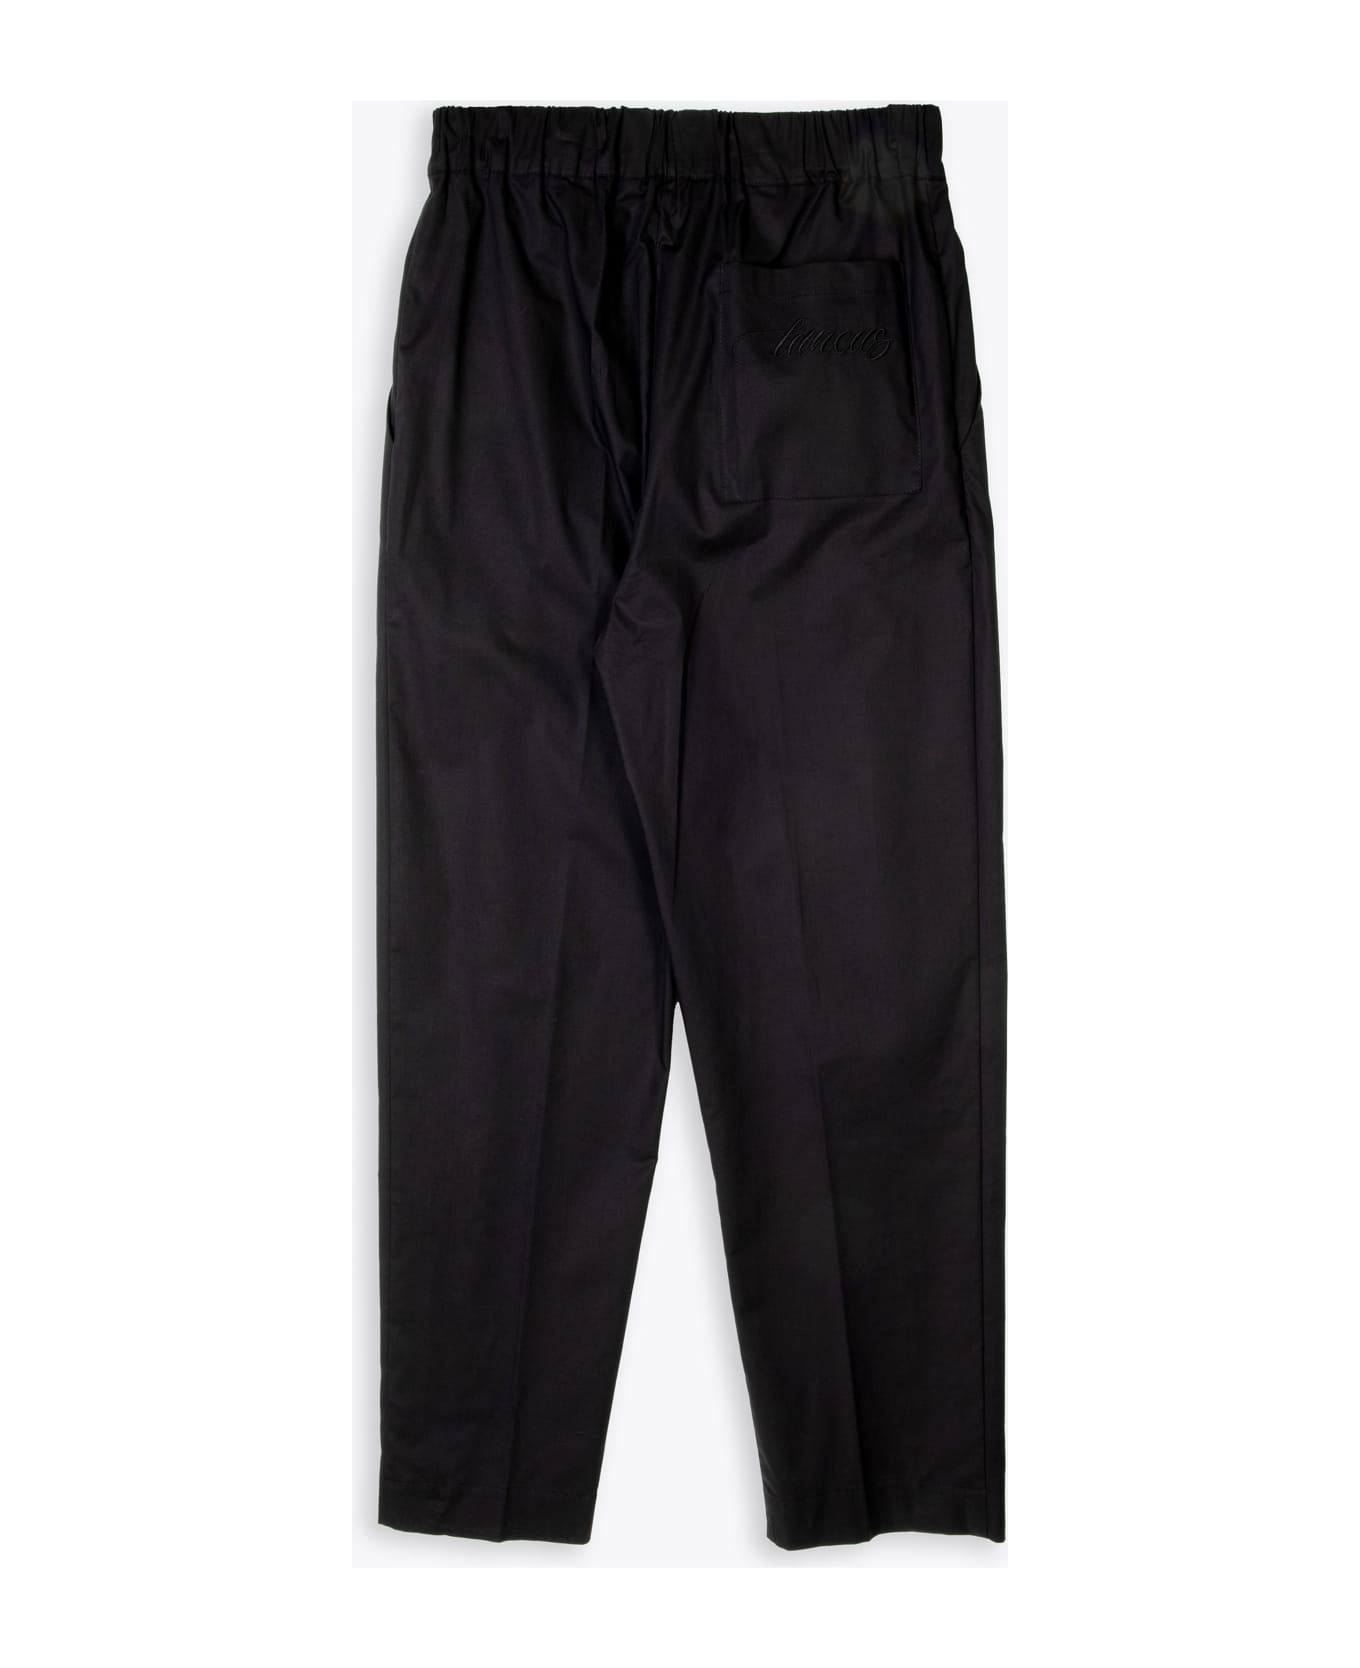 Laneus Baggie Unito Black poplin cotton pant with elastic waistband - Nero